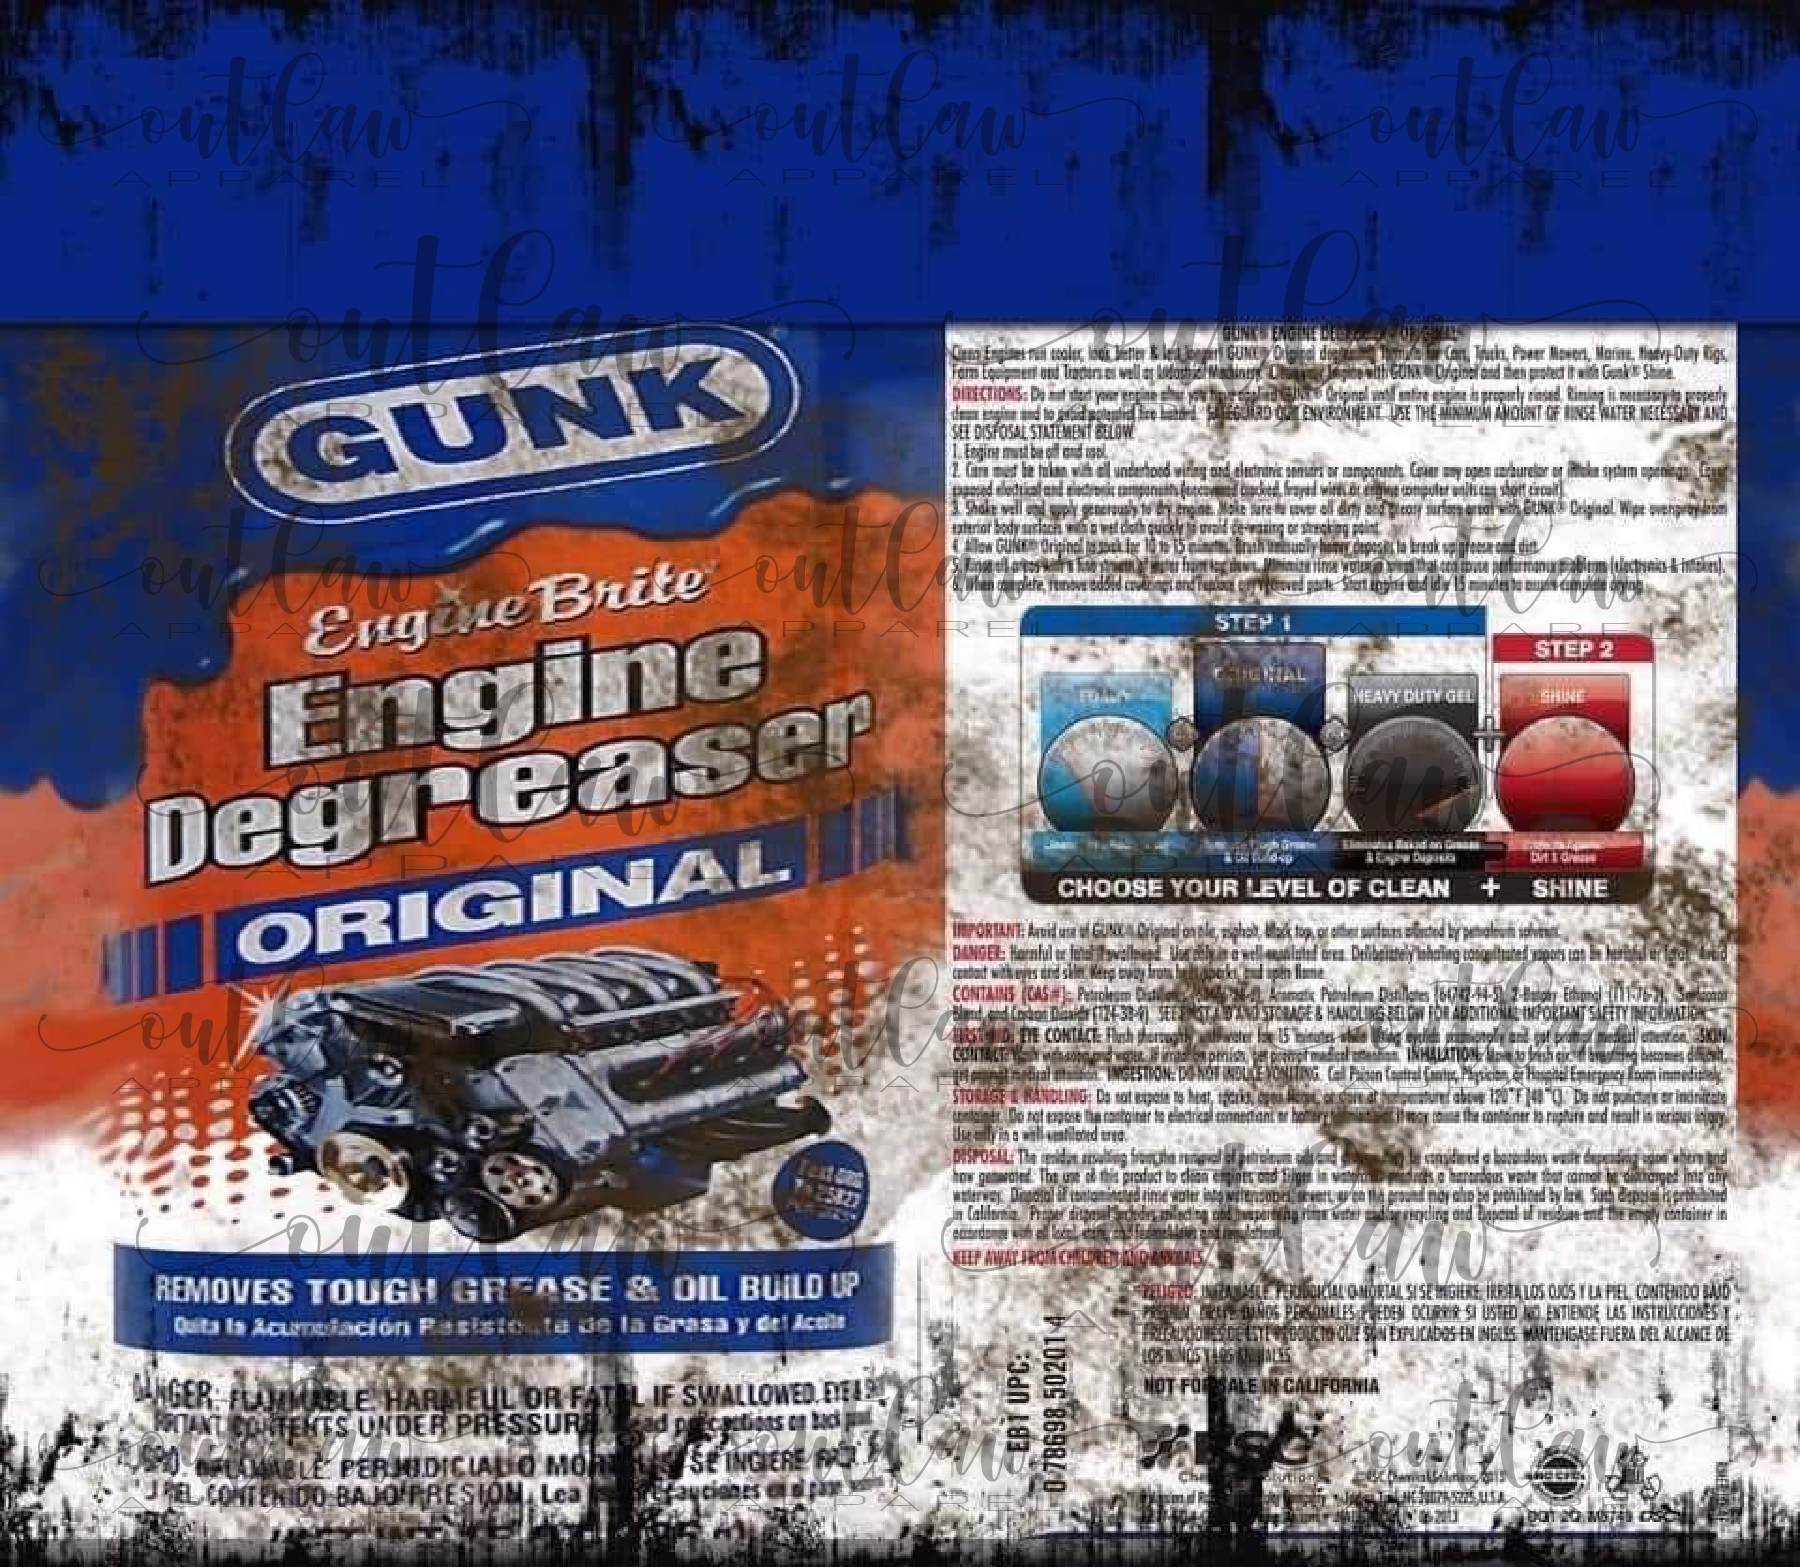 GUNK Heavy Duty GEL Engine Degreaser